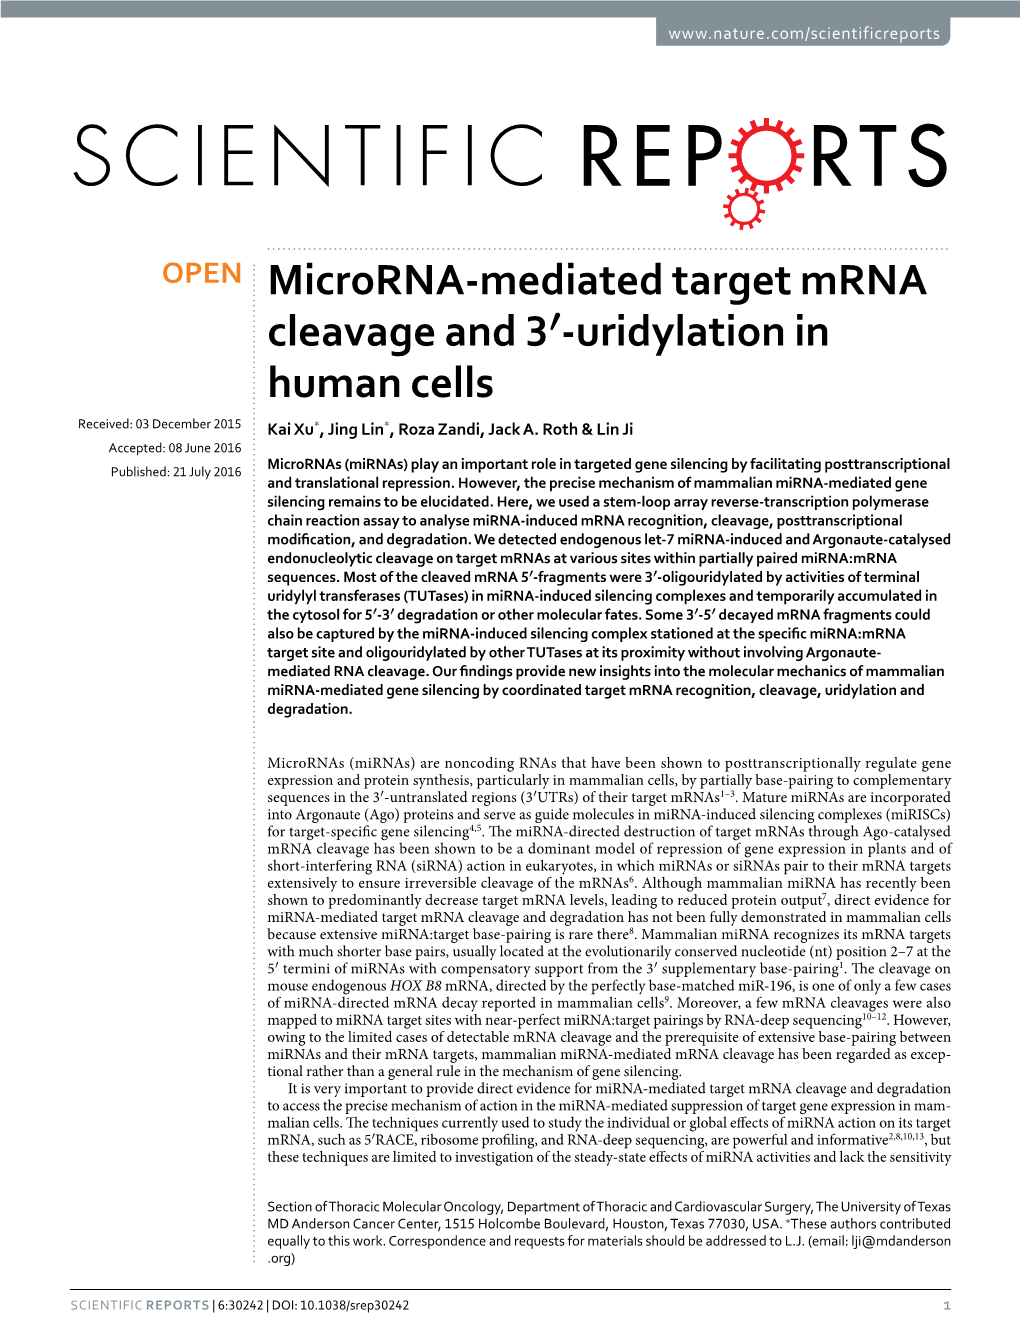 Microrna-Mediated Target Mrna Cleavage and 3′-Uridylation in Human Cells Received: 03 December 2015 Kai Xu*, Jing Lin*, Roza Zandi, Jack A